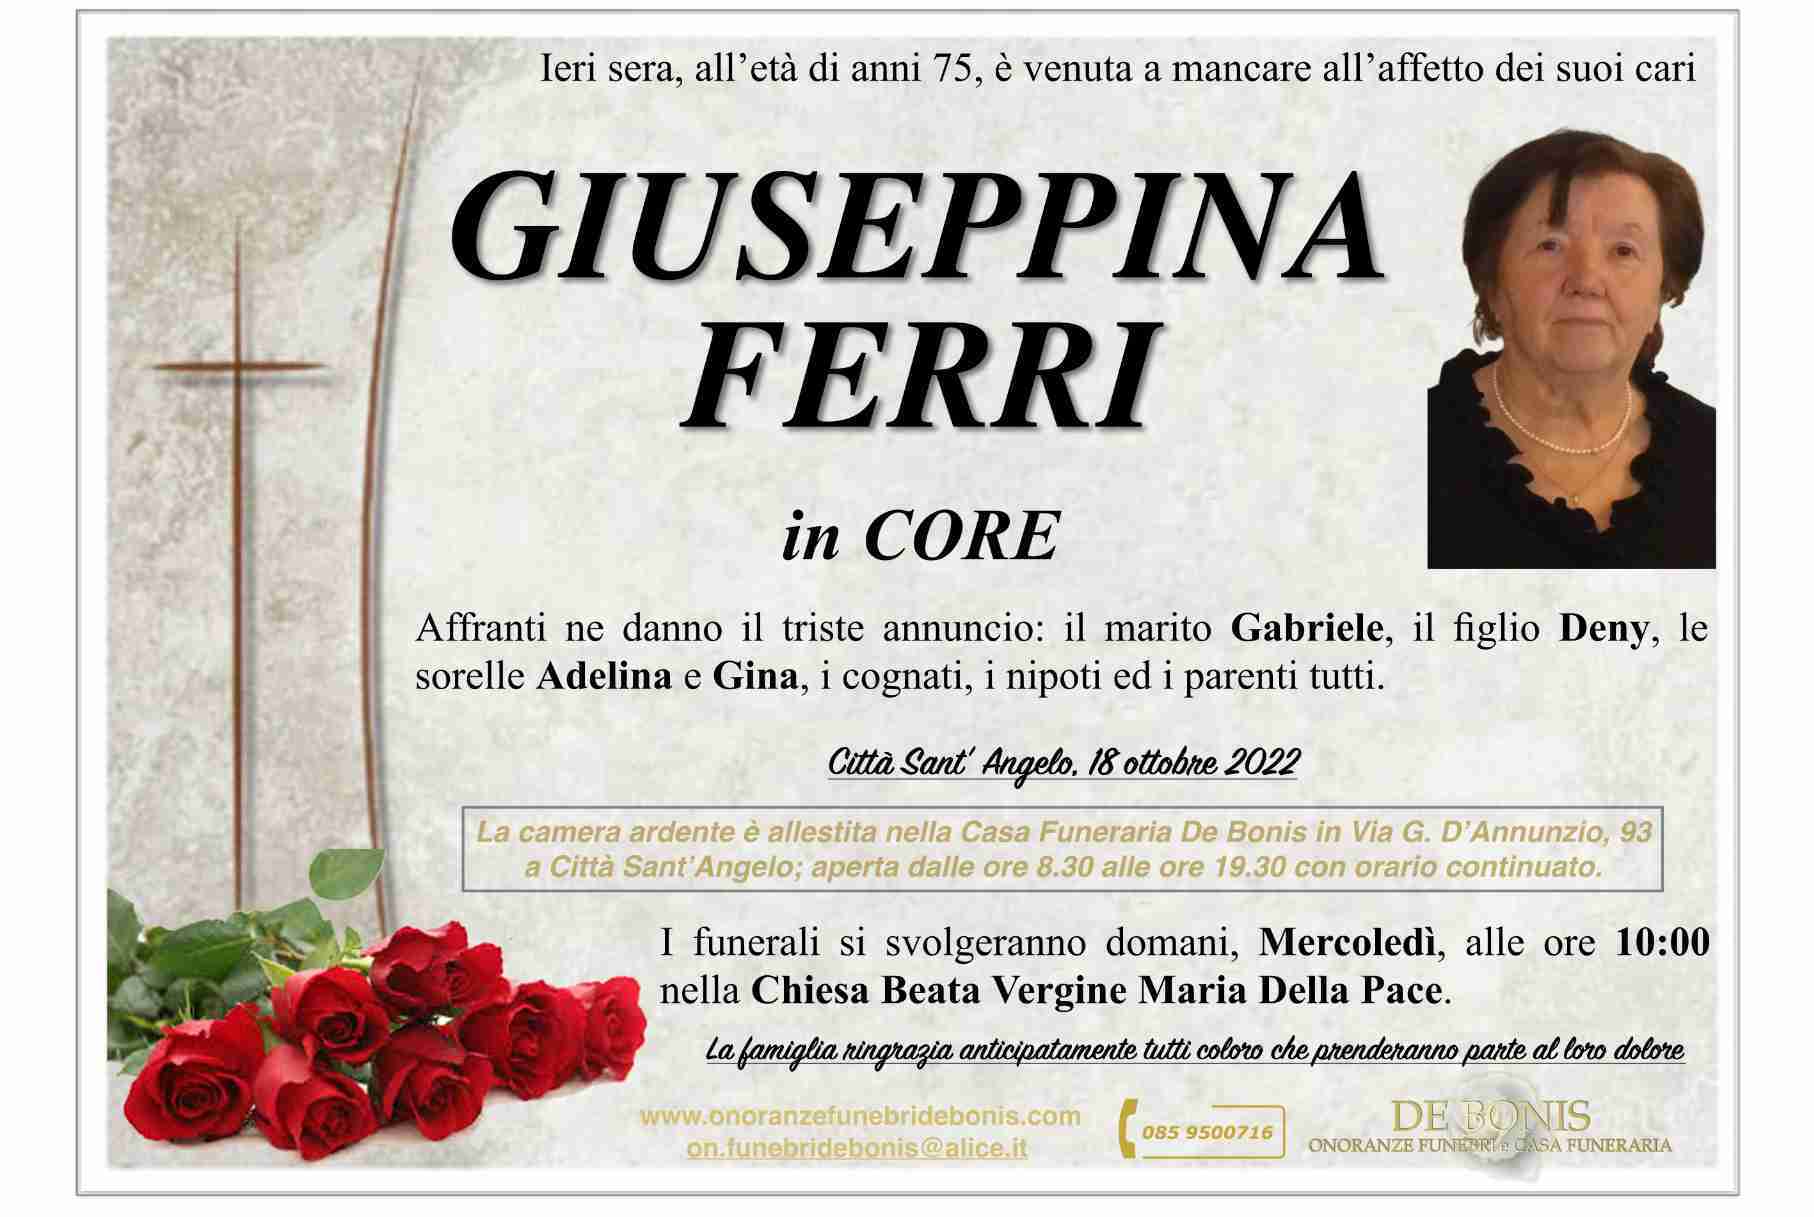 Giuseppina Ferri